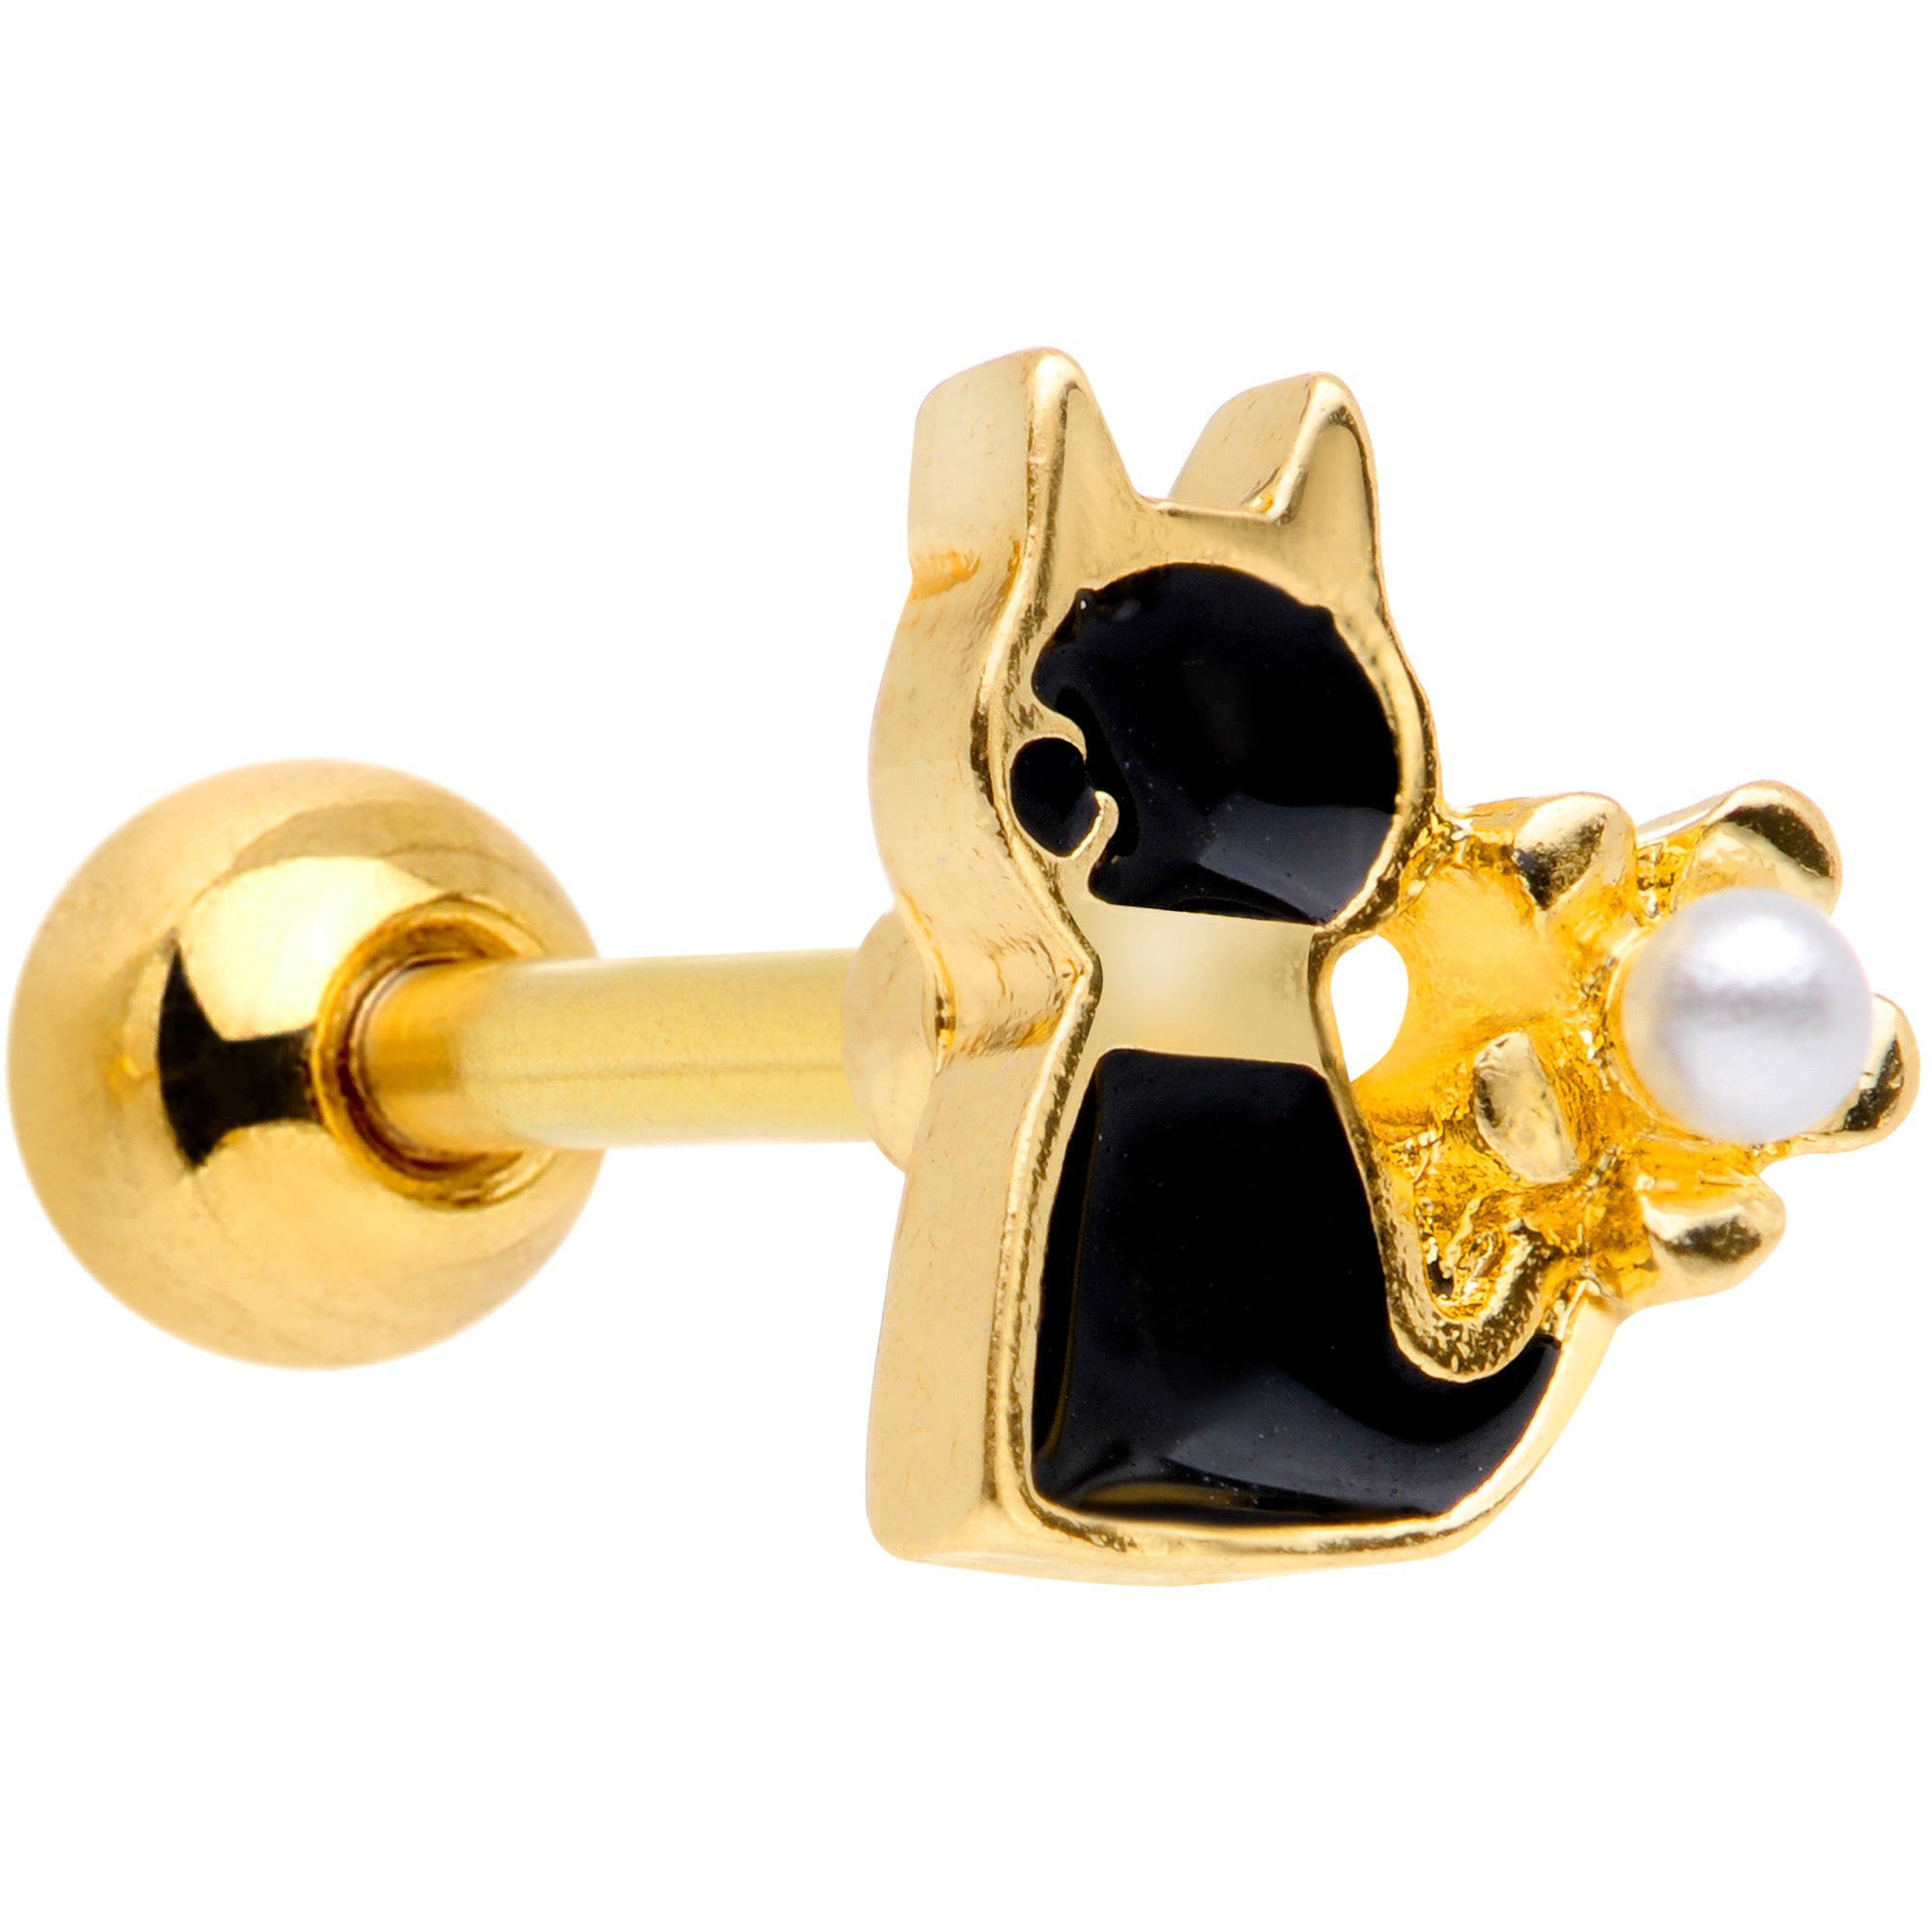 16 Gauge 1/4 Gold Tone Flower Black Cat Cartilage Tragus Earring